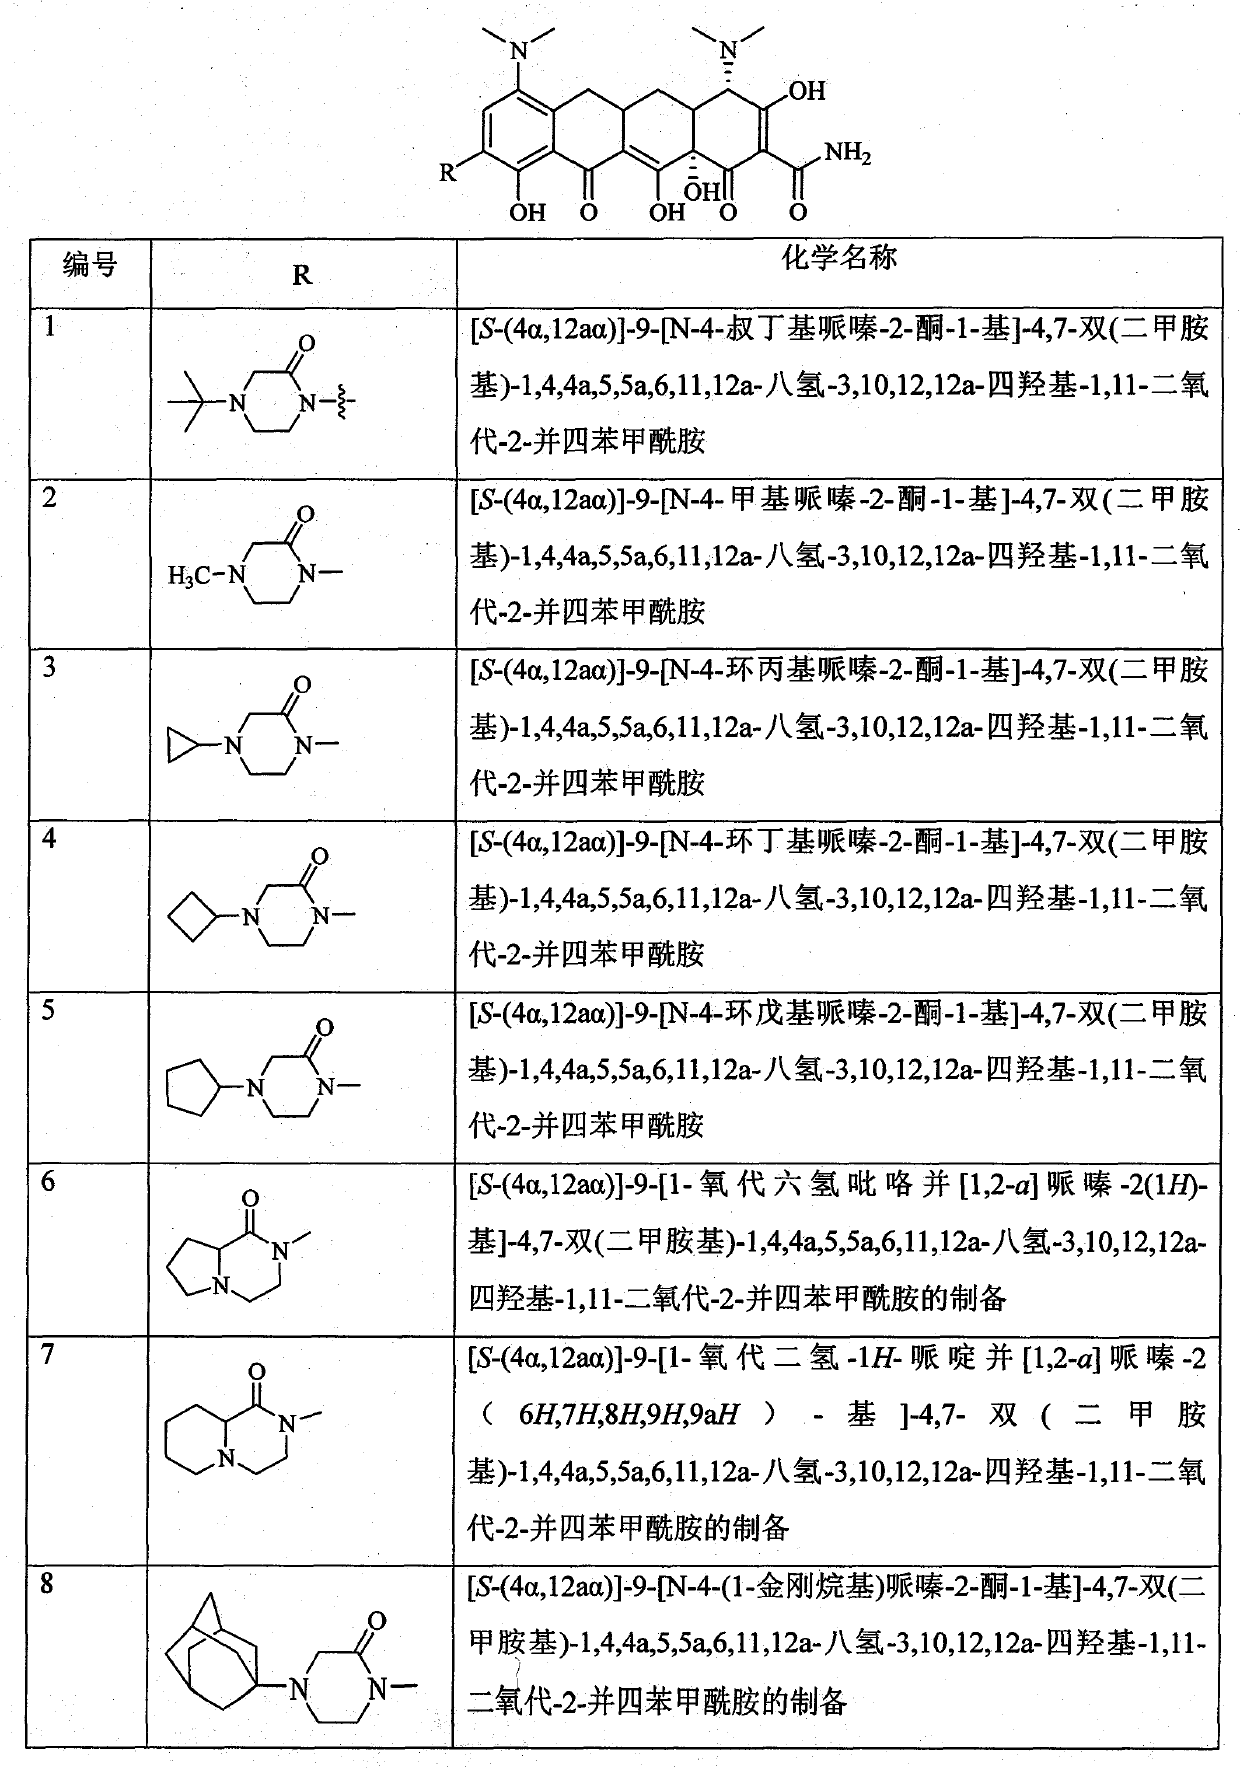 Piperazinone substituted tetracycline derivatives